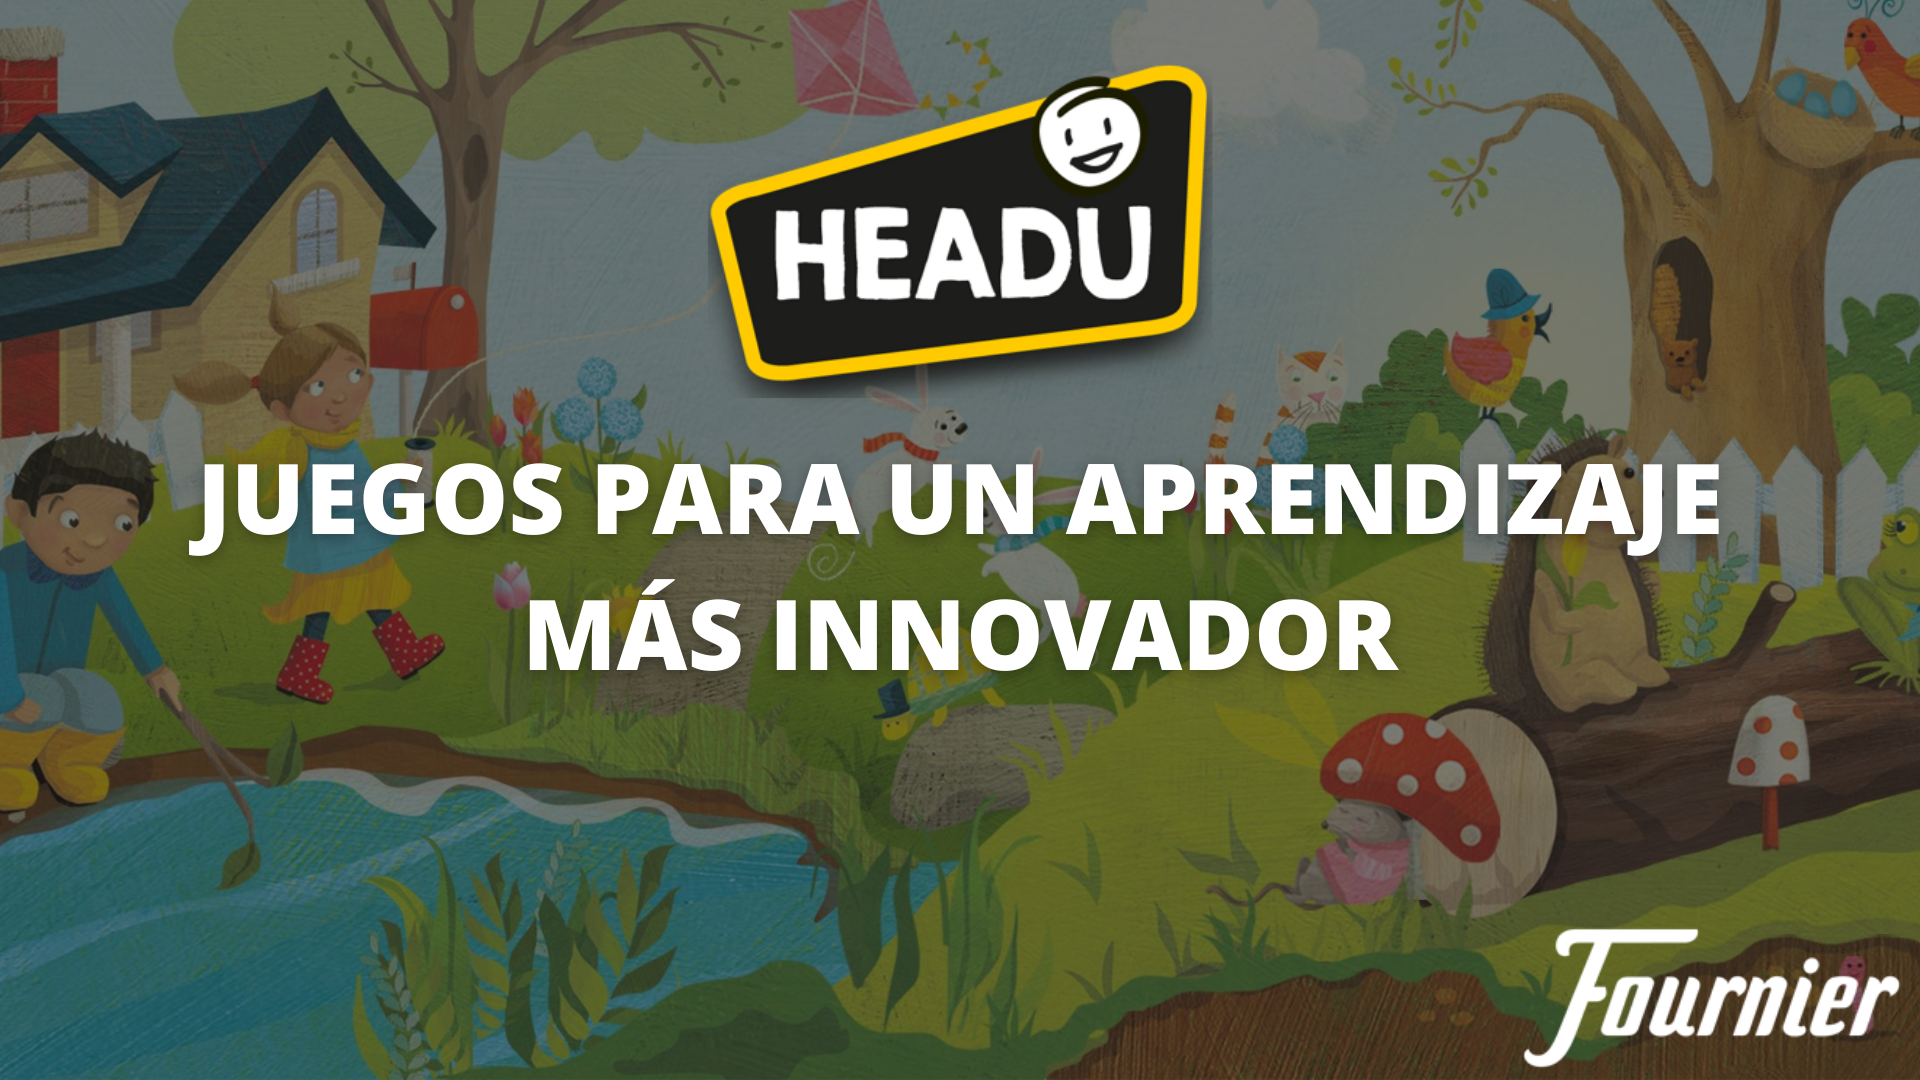 headu-juegos-aprendizaje